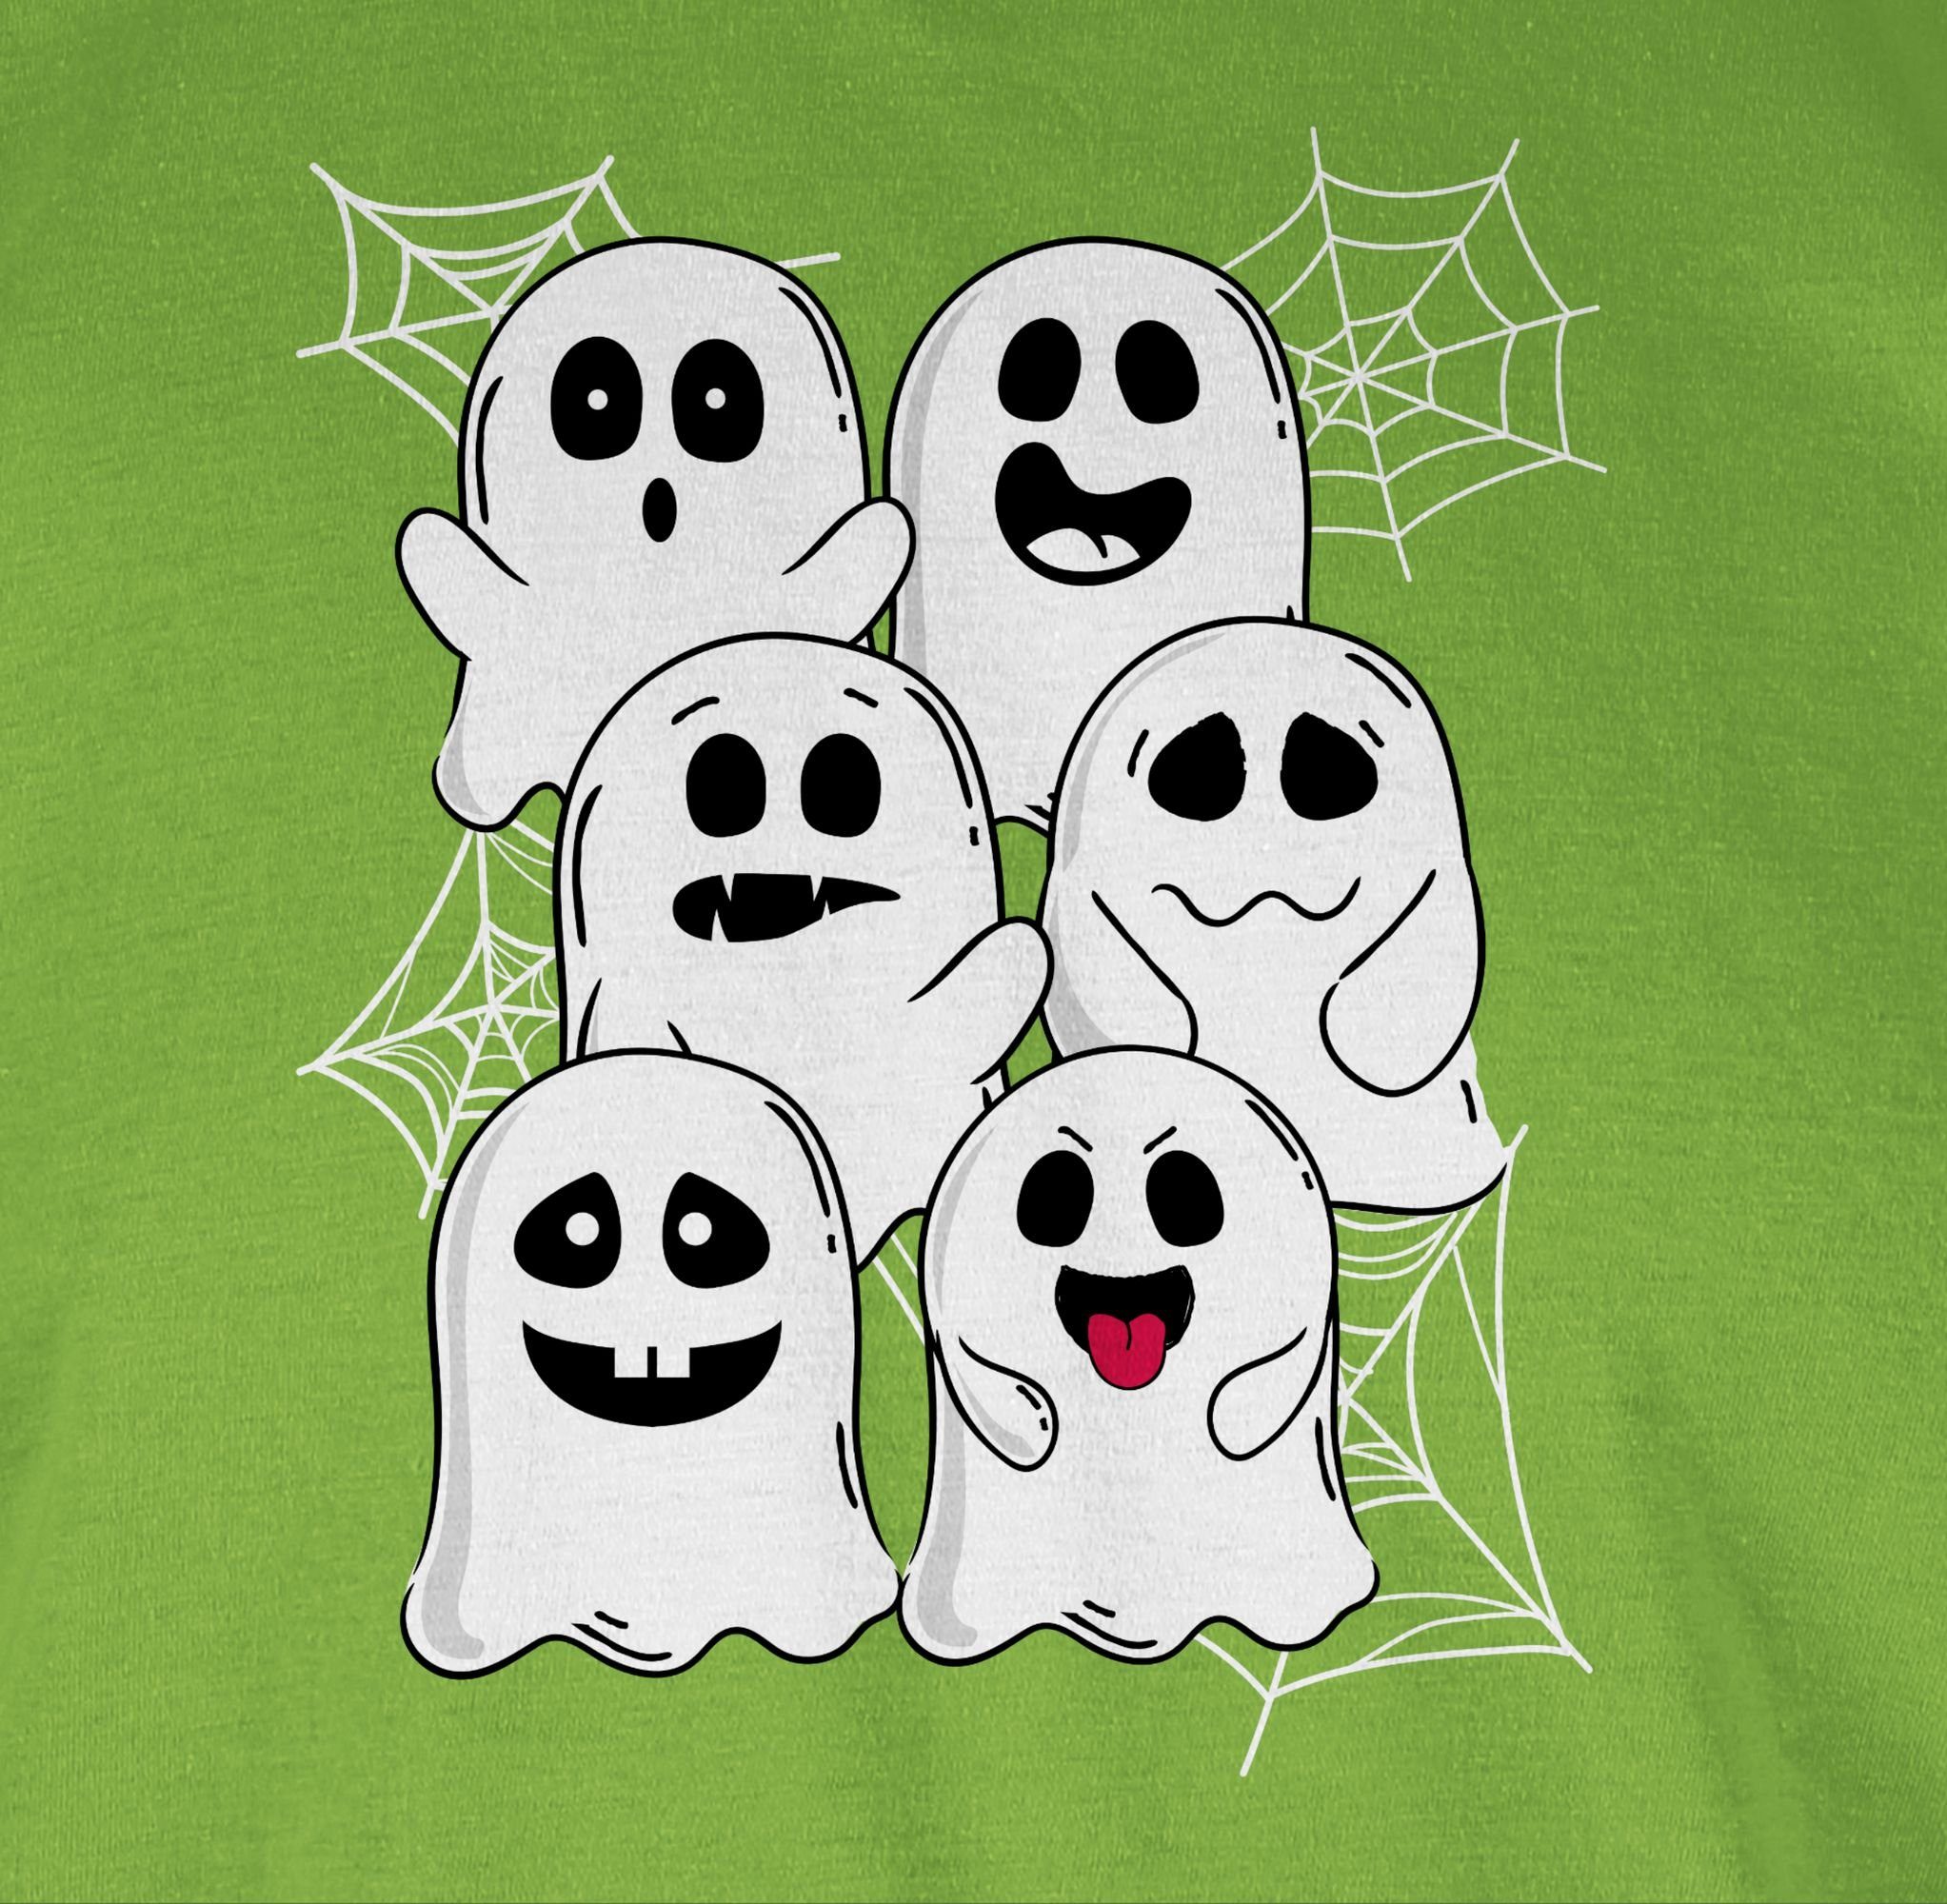 T-Shirt Gespenster Hellgrün Lustige Halloween Herren Gespenst 02 Kostüme Geister Geist Shirtracer